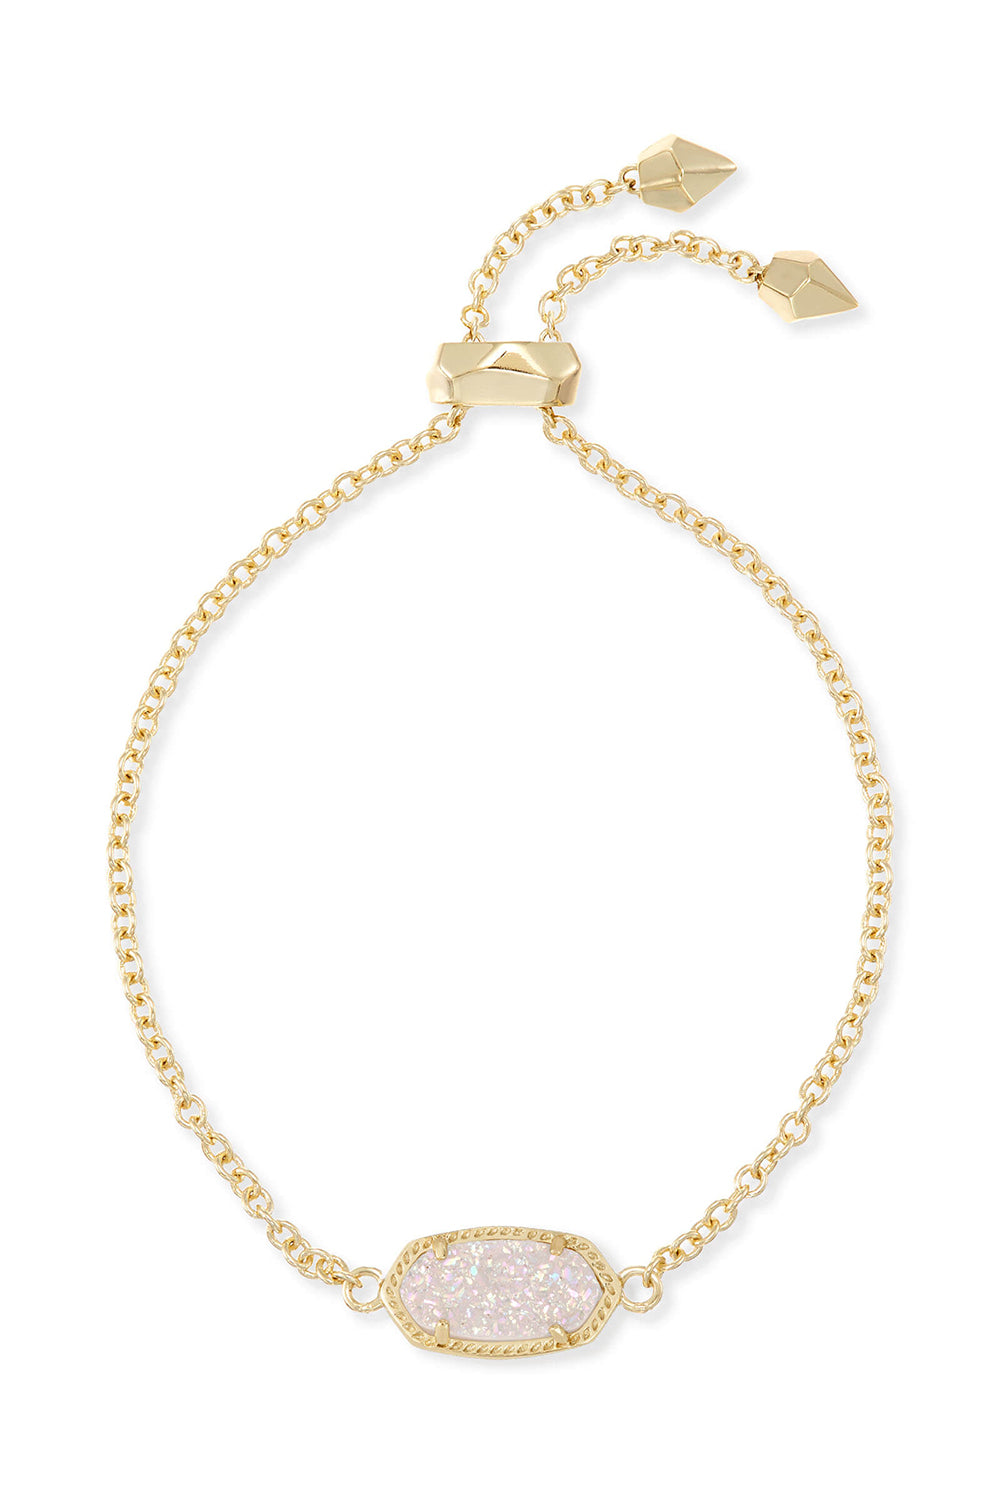 Kendra Scott: Elaina Delicate Gold Chain Bracelet - Iridescent Drusy | Makk Fashions